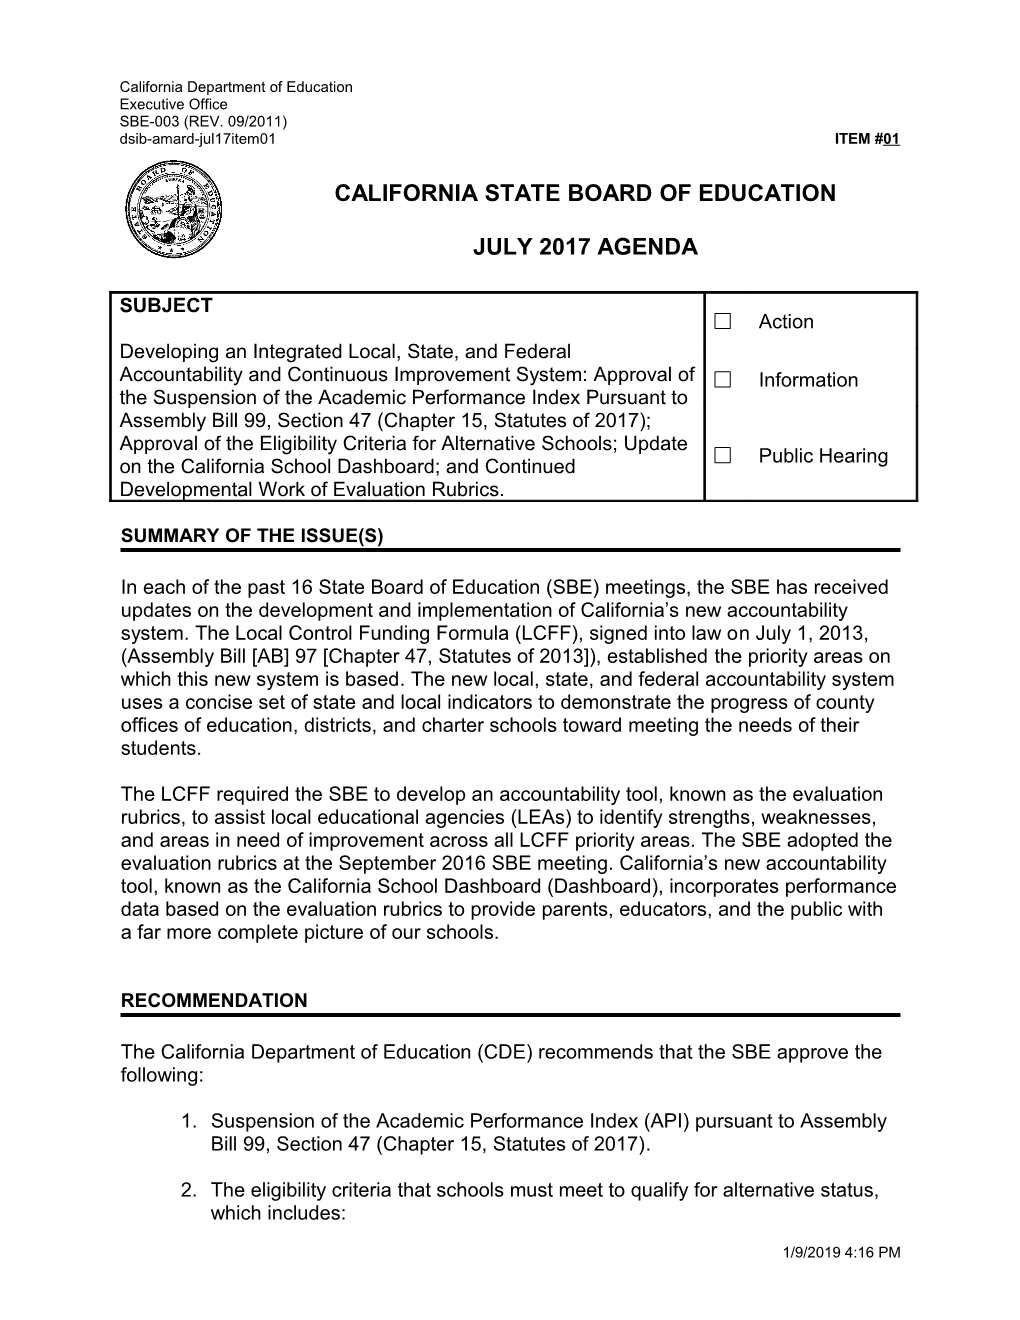 July 2017 Agenda Item 01 - Meeting Agendas (CA State Board of Education)